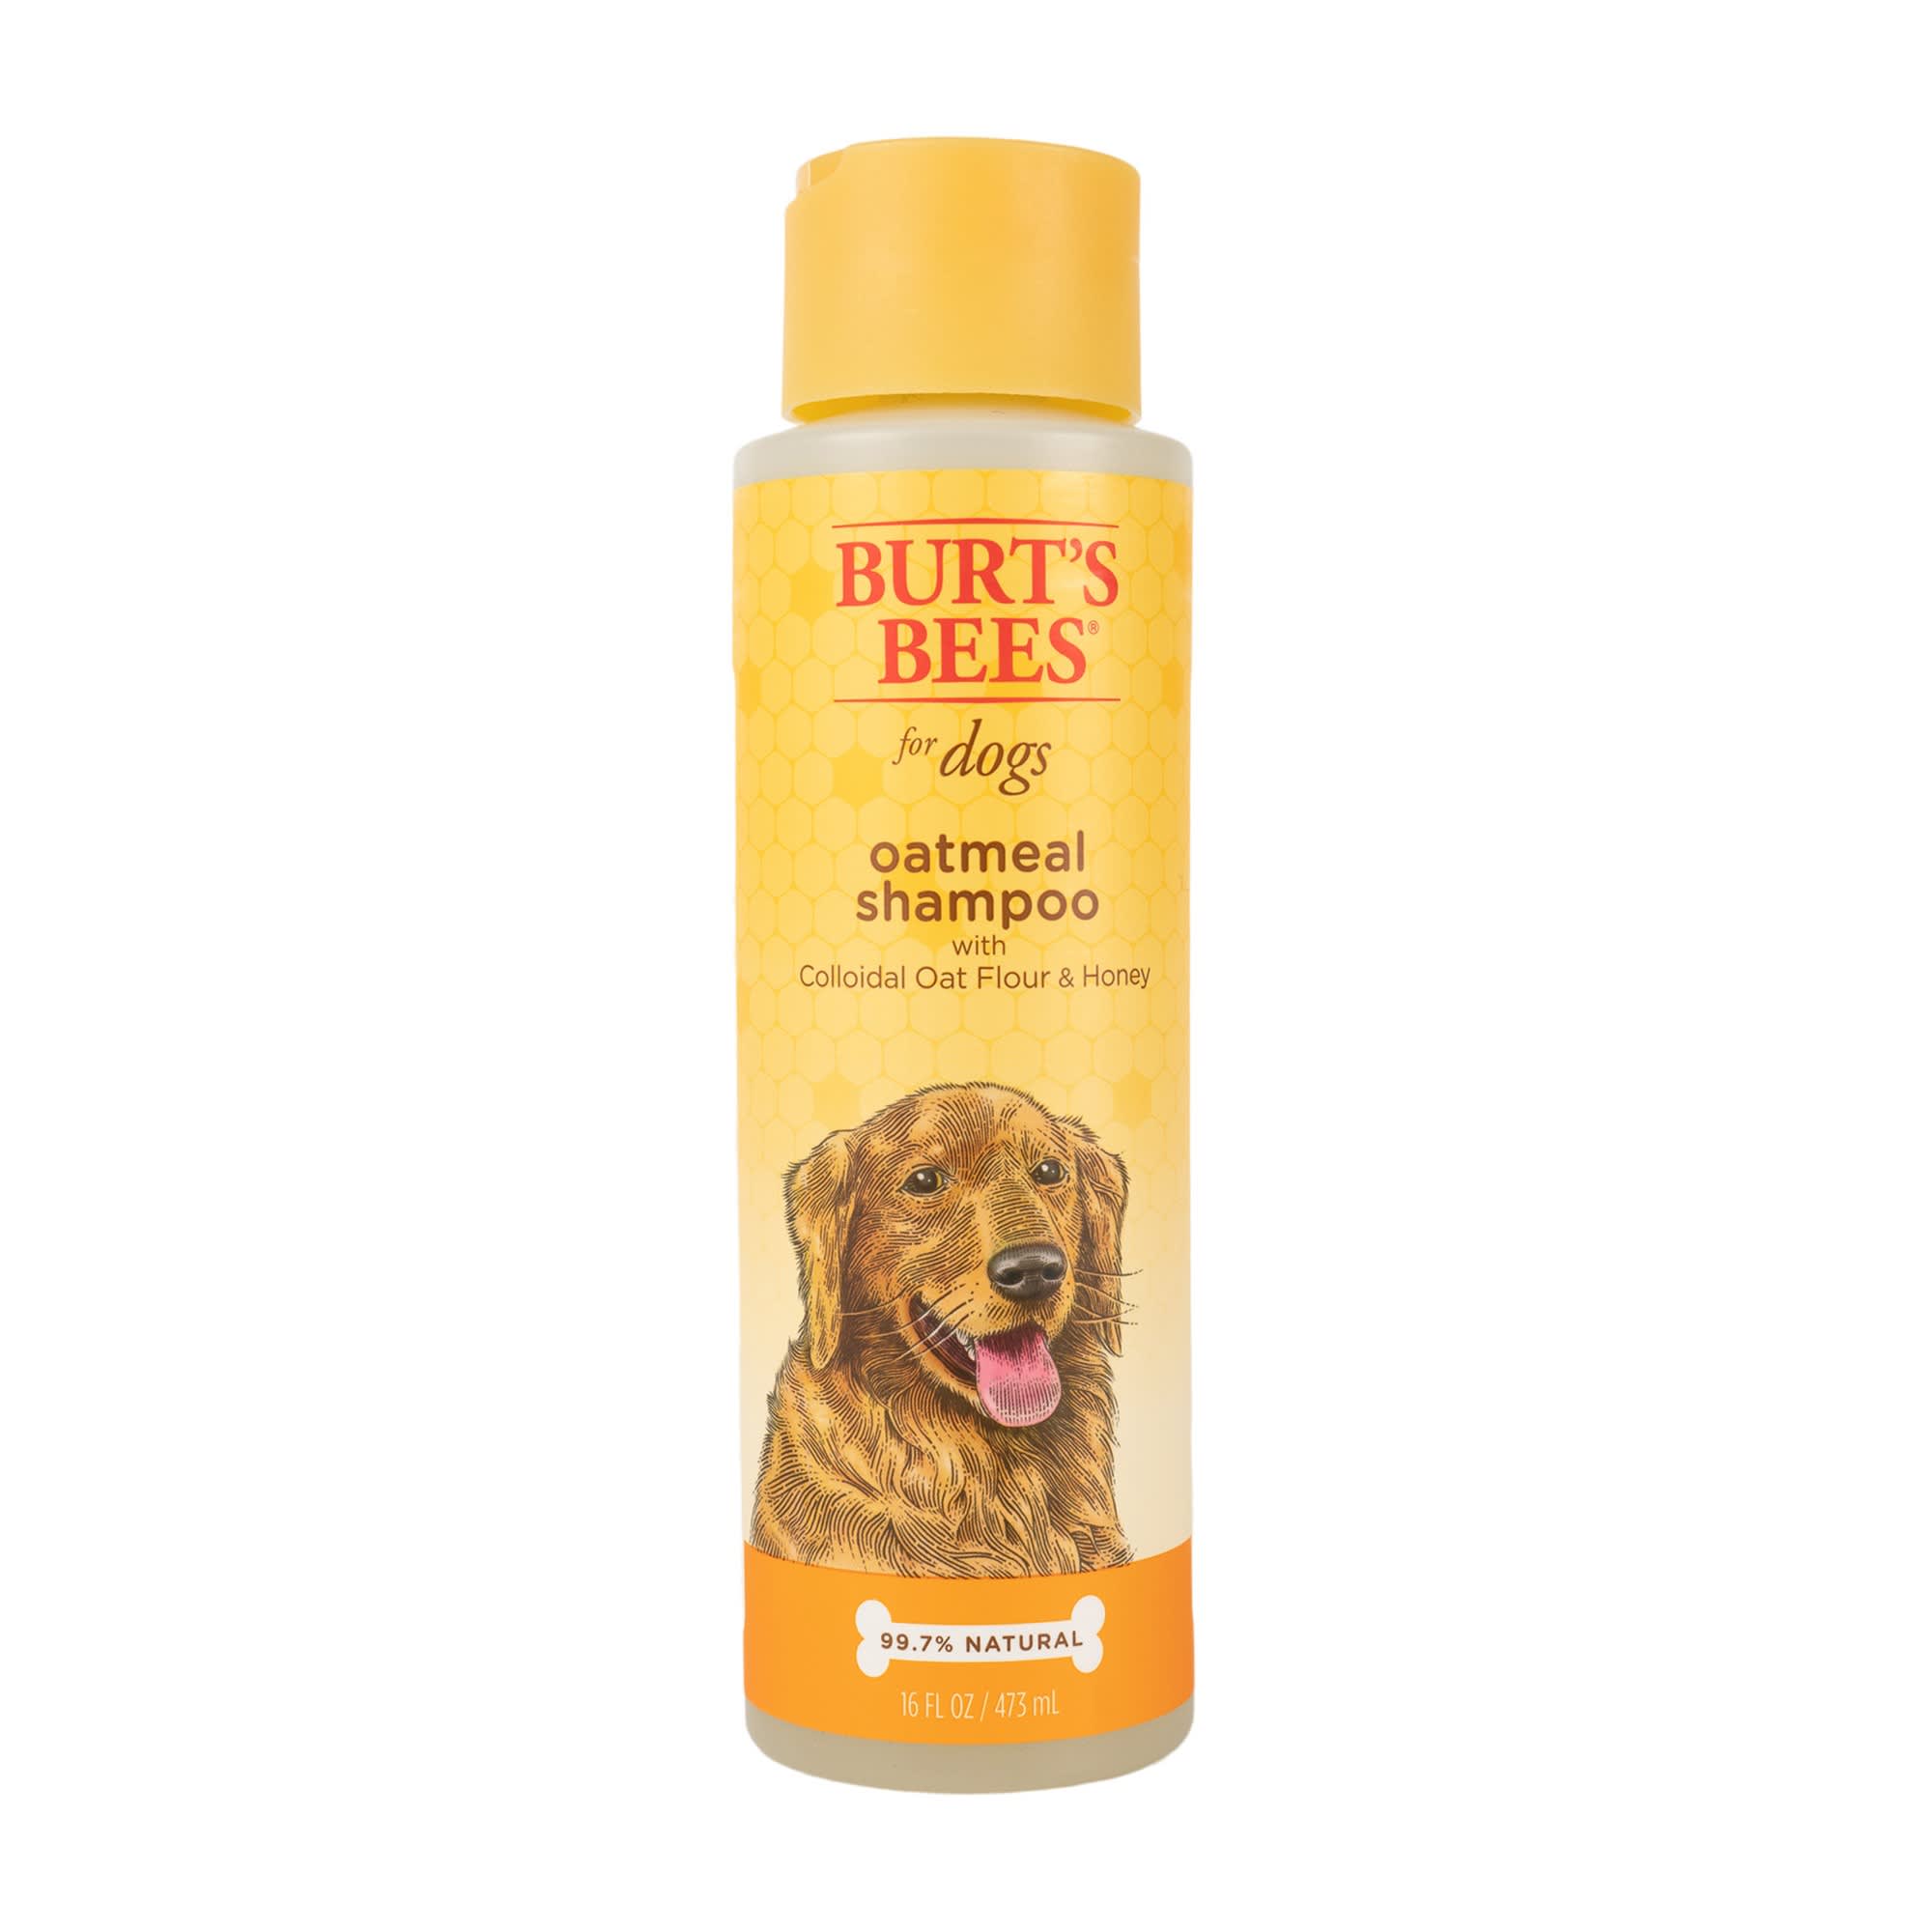 dog shampoo and conditioner